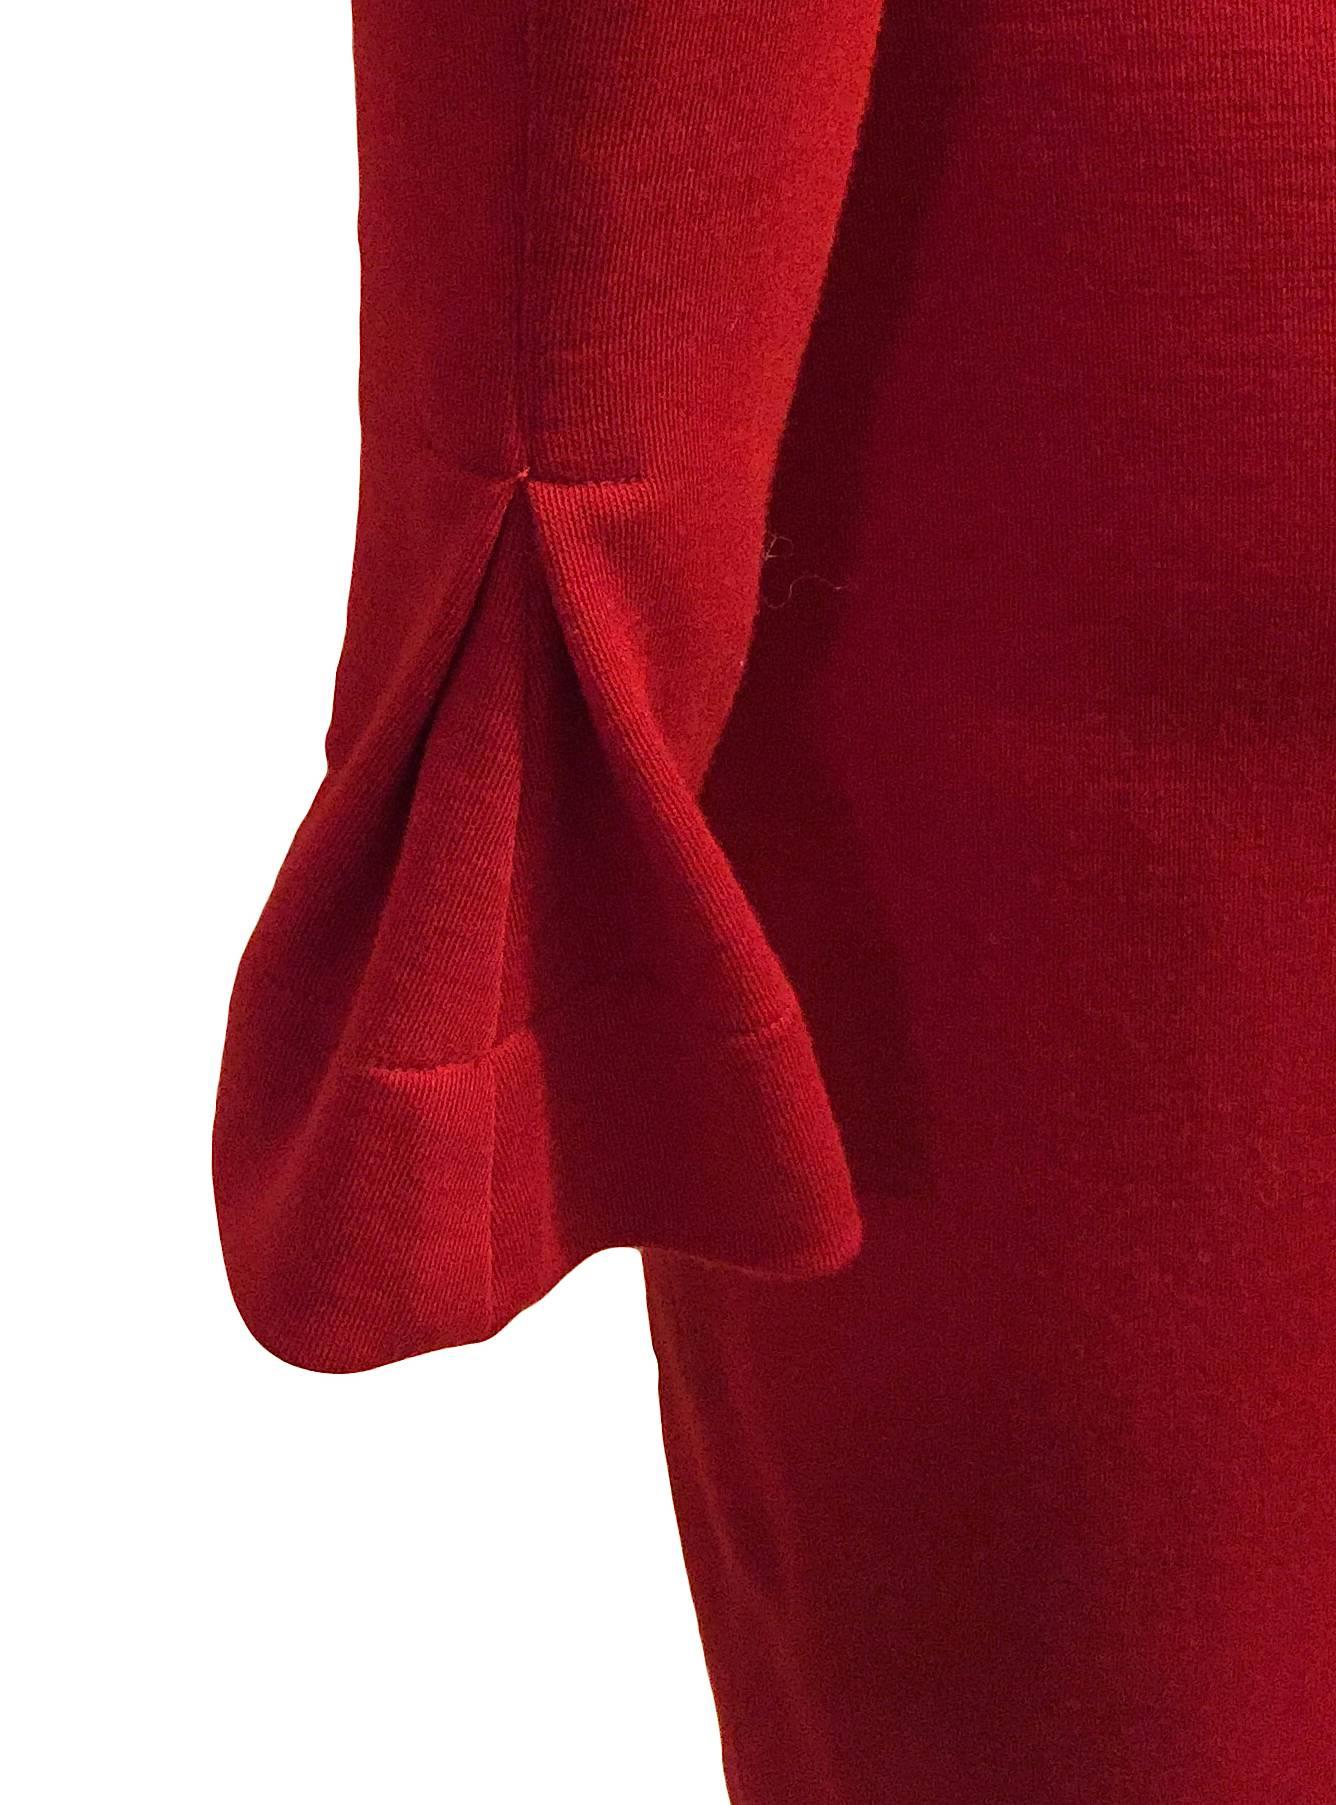 Women's Claude Montana Red Wool Dress, 1980s For Sale